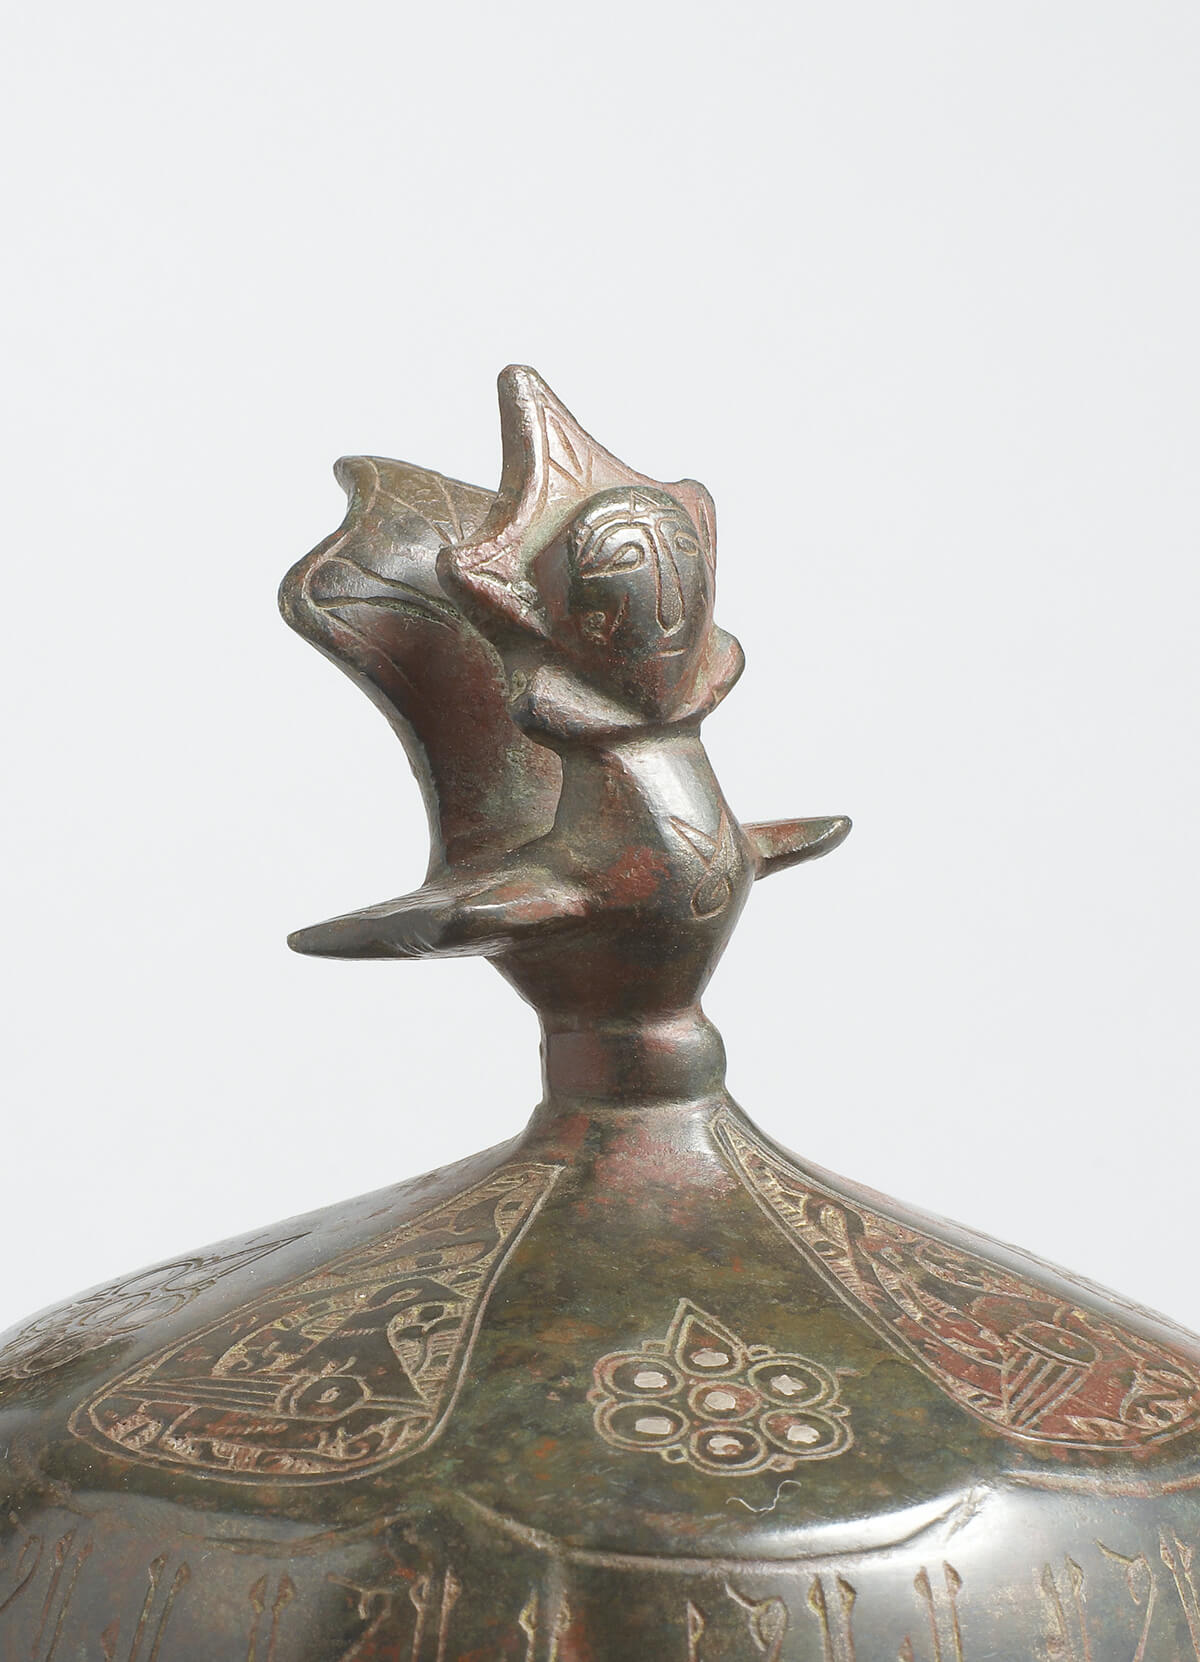 Khorasan covered jug (detail)